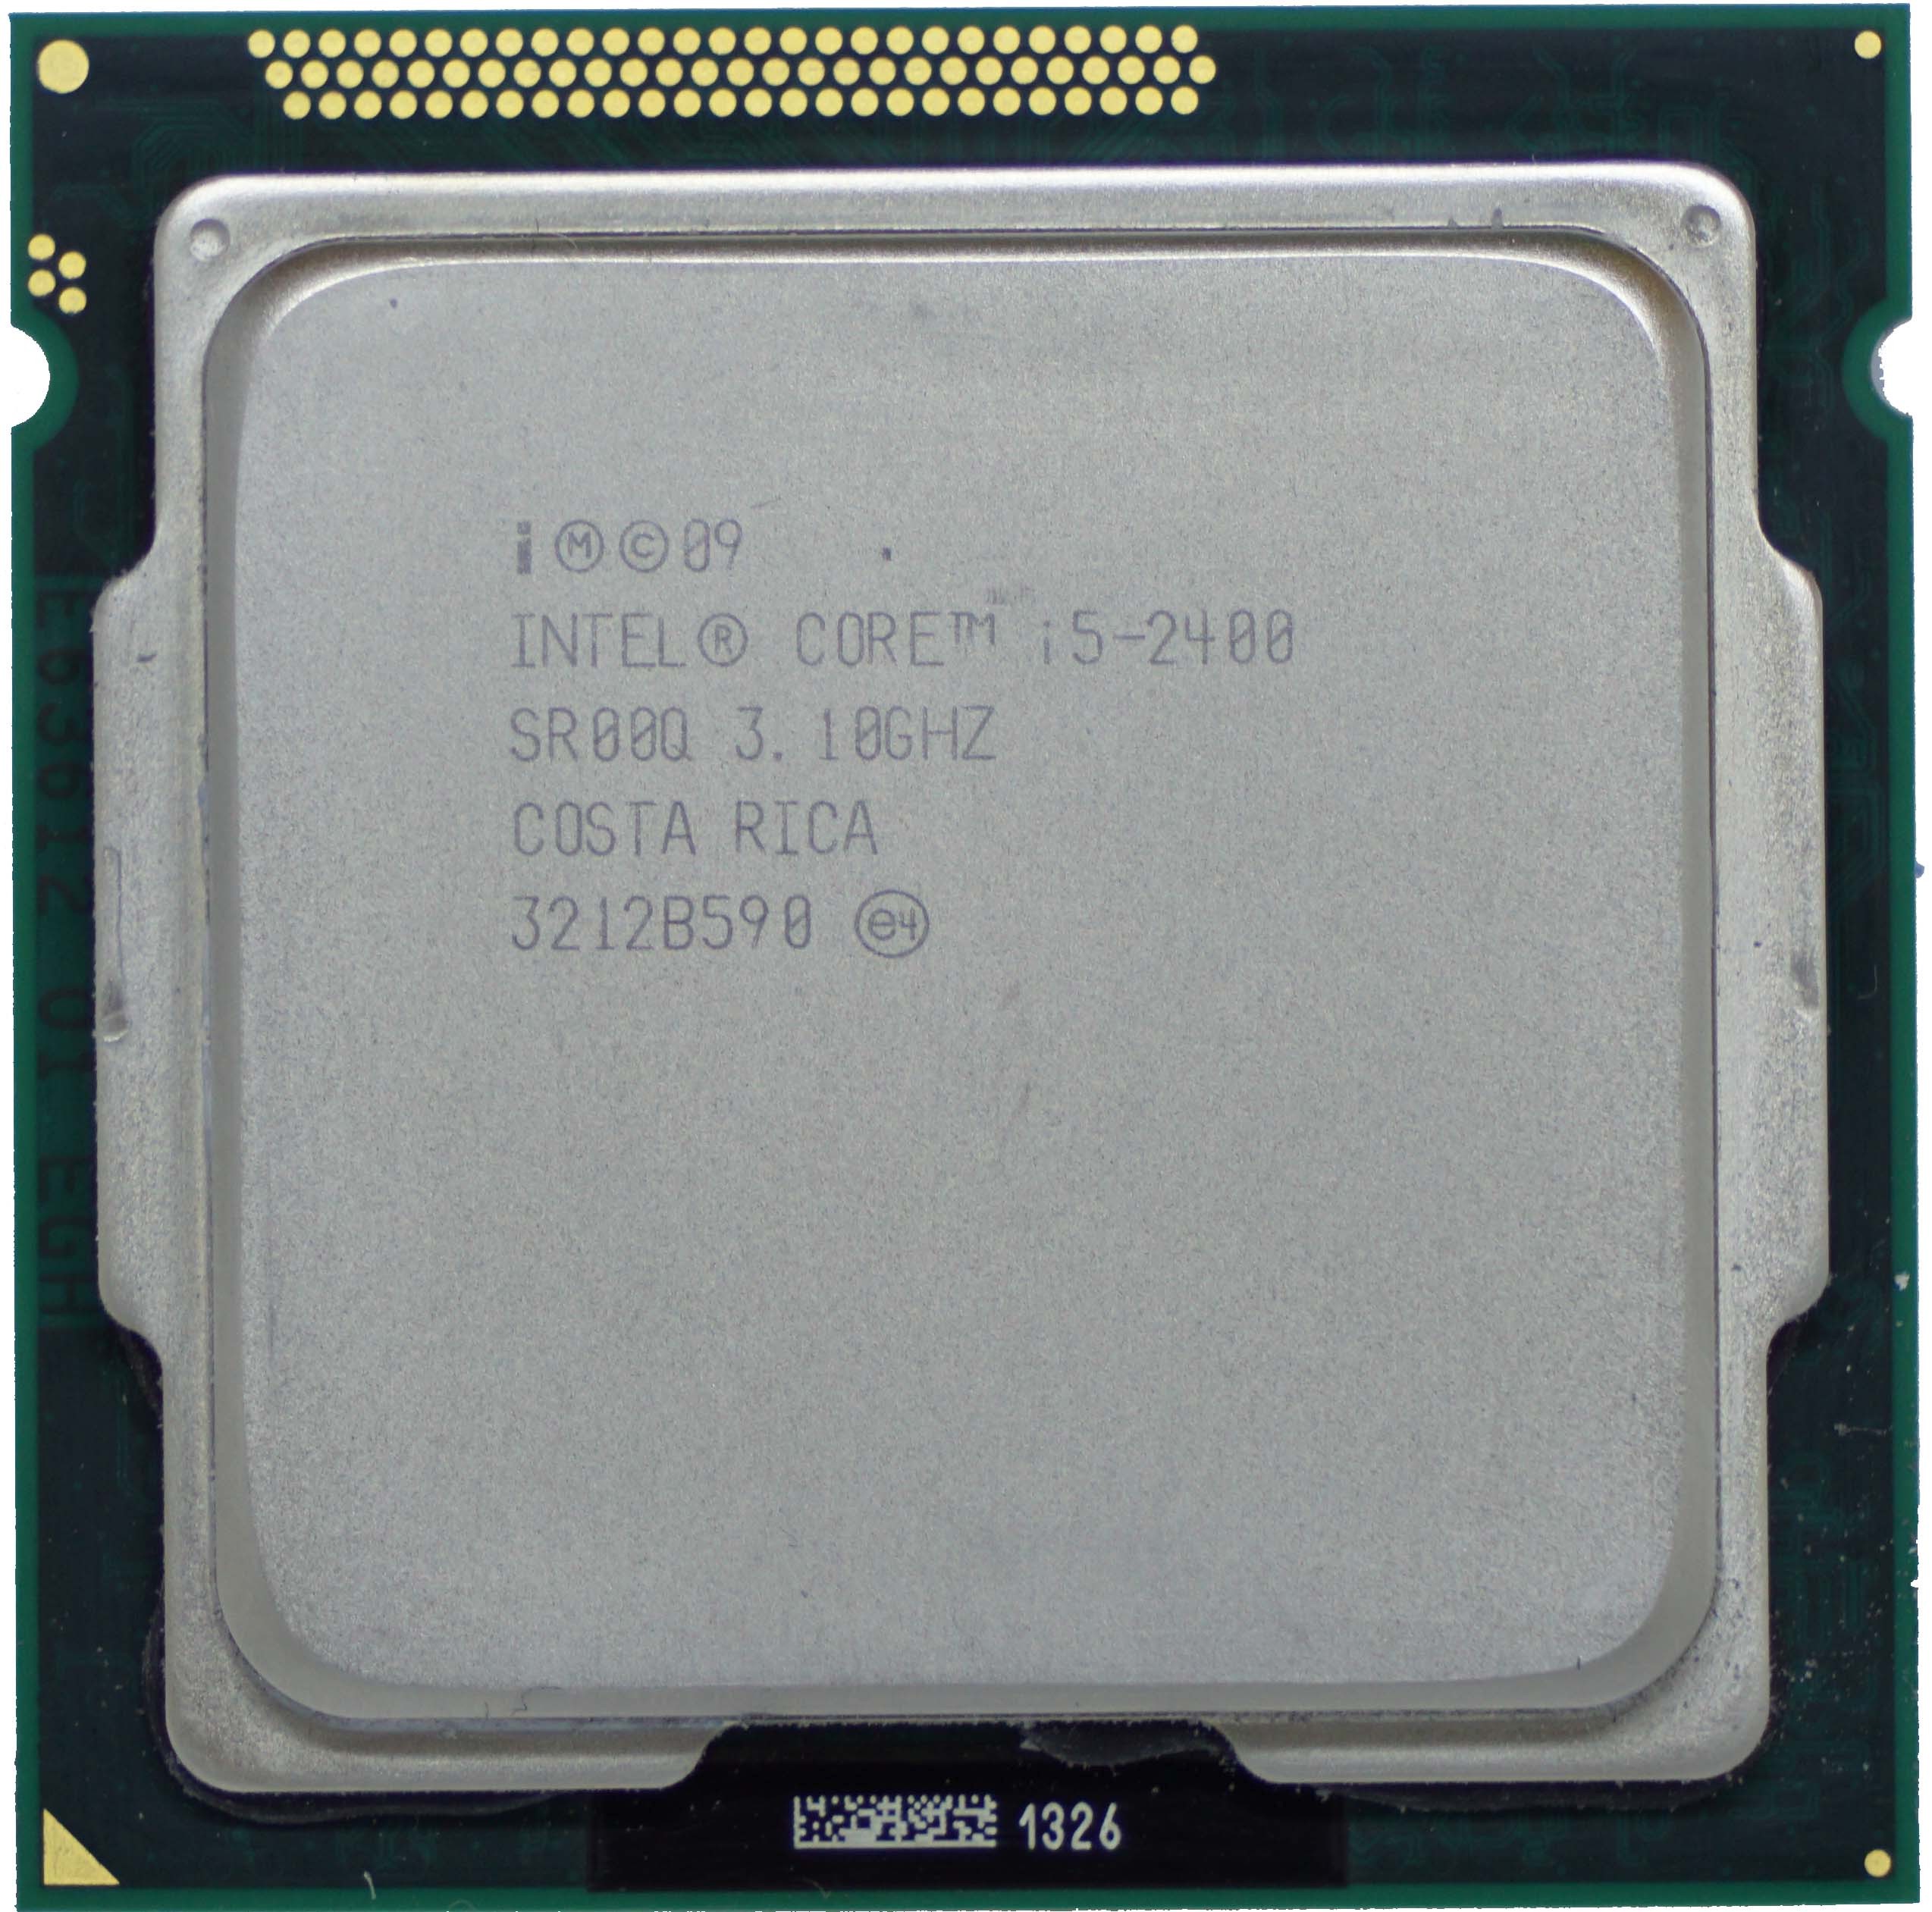 intel core i5 2400 (3.10 ghz)